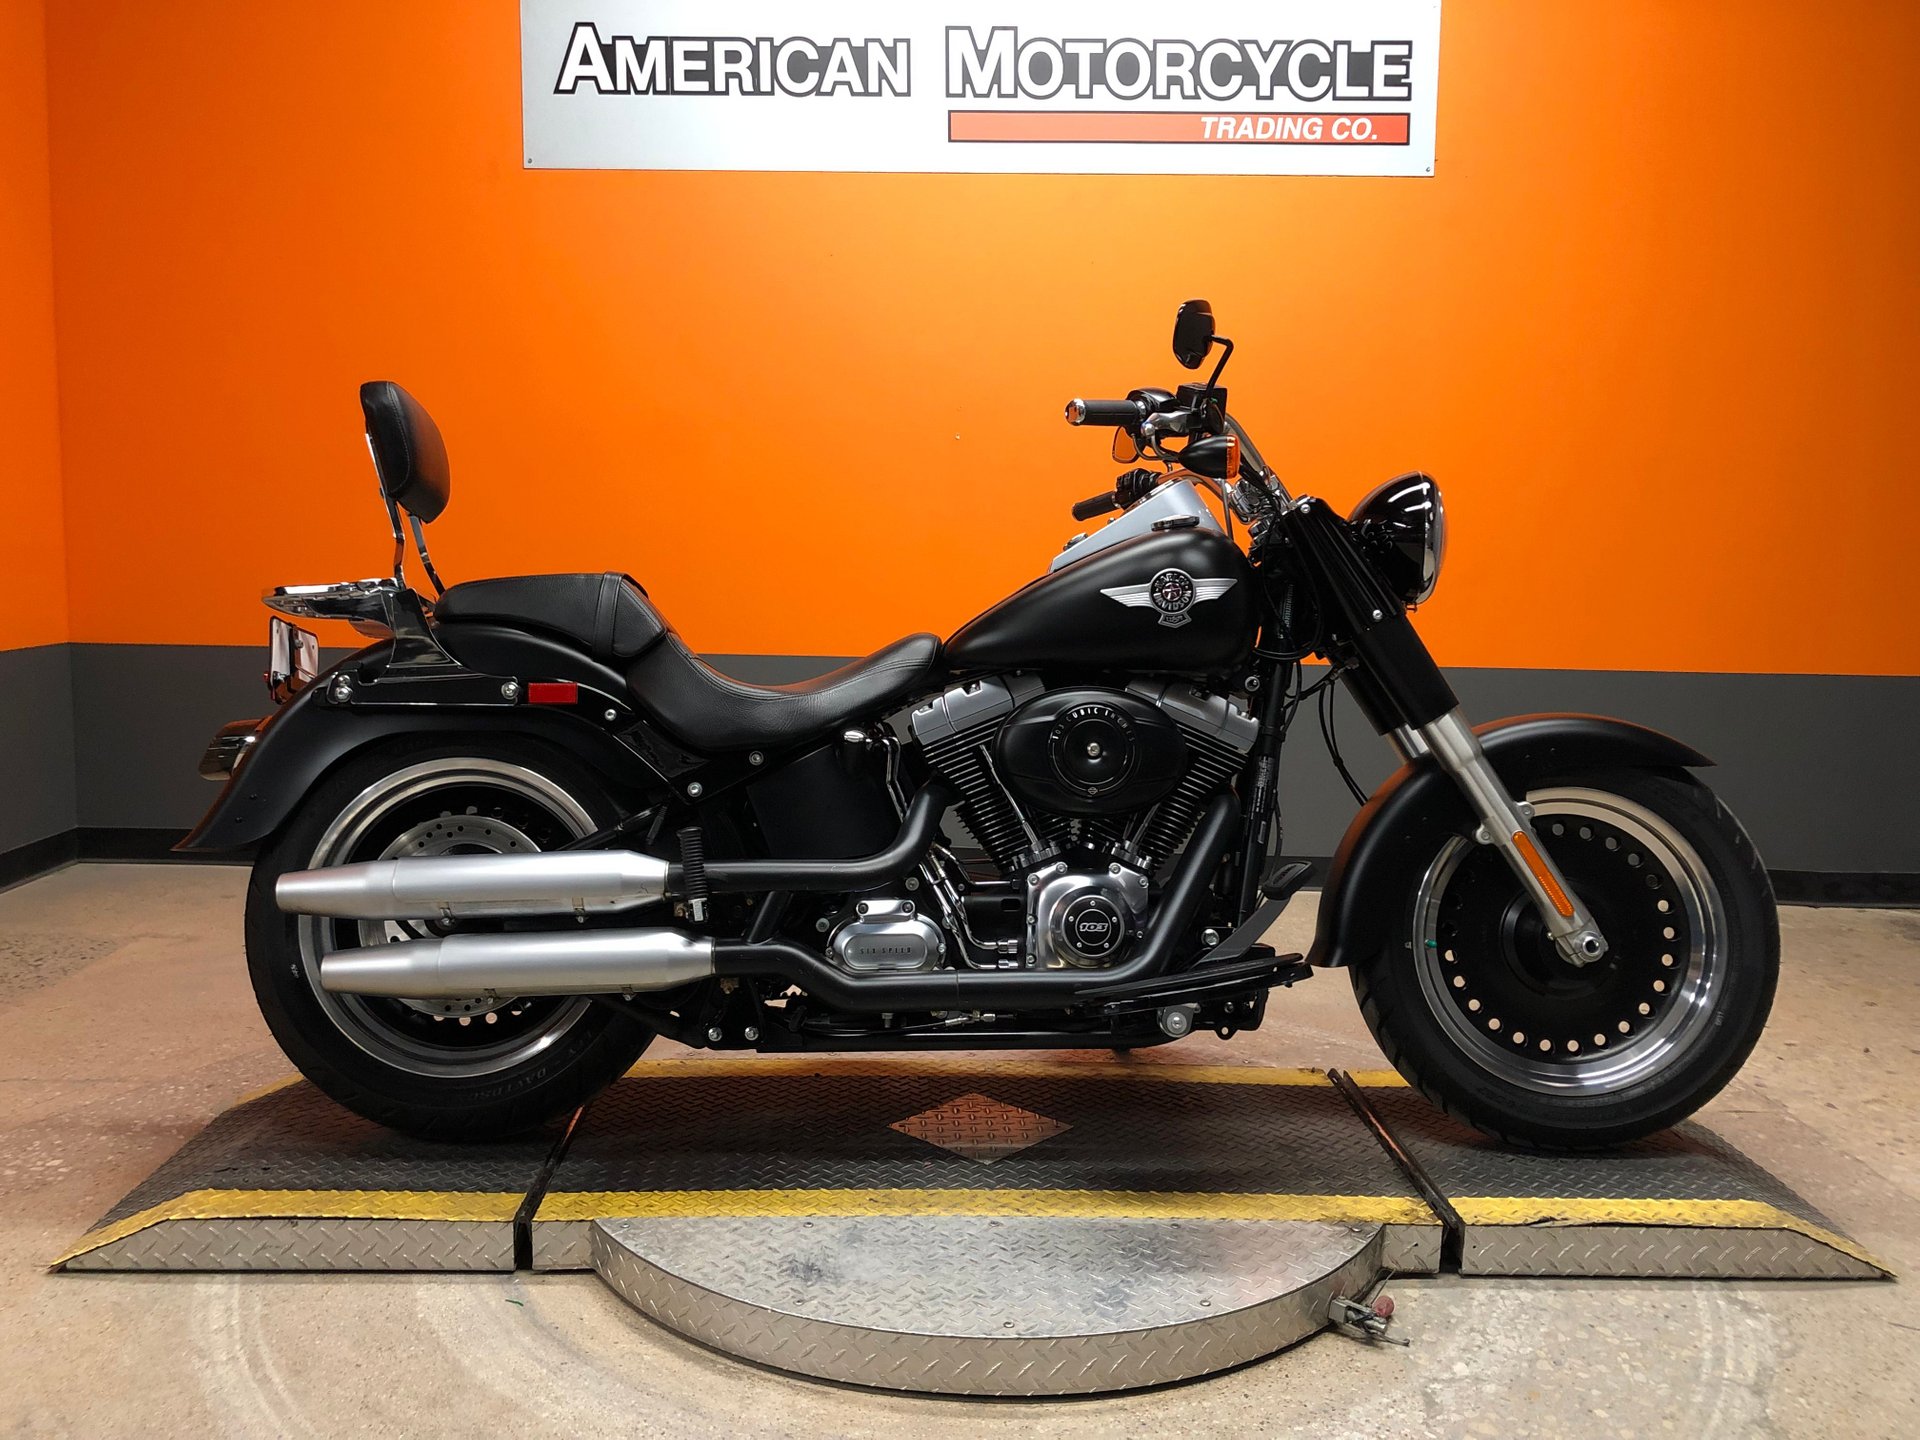 2014 Harley-Davidson Softail Fat Boy | American Motorcycle Trading Company  - Used Harley Davidson Motorcycles